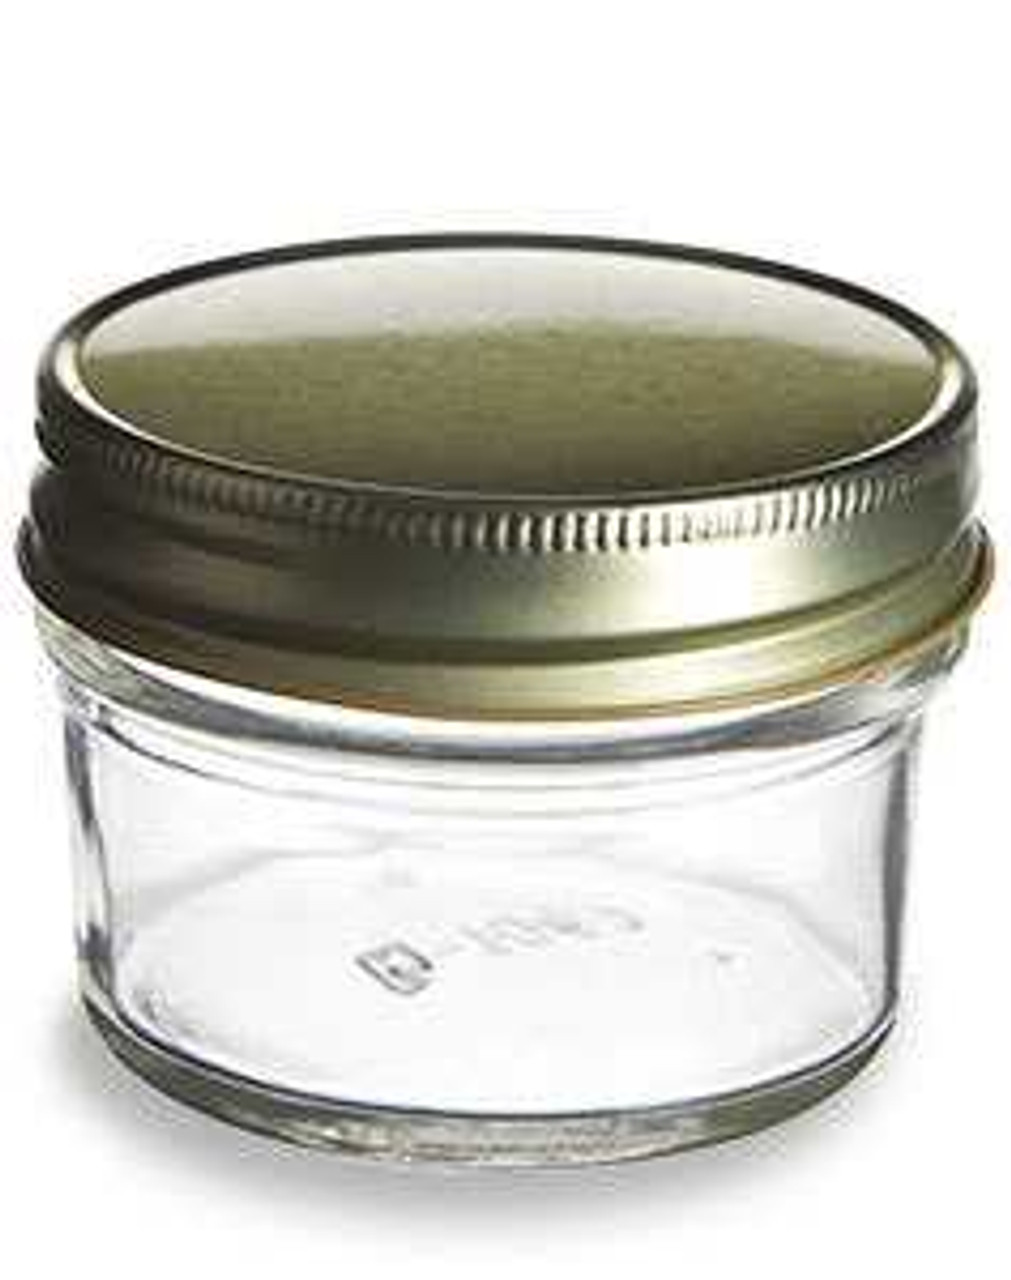 4 oz Mason Glass Jar with Lid - Choose from Flat, Safety Button, Straw  Hole, Daisy Cut